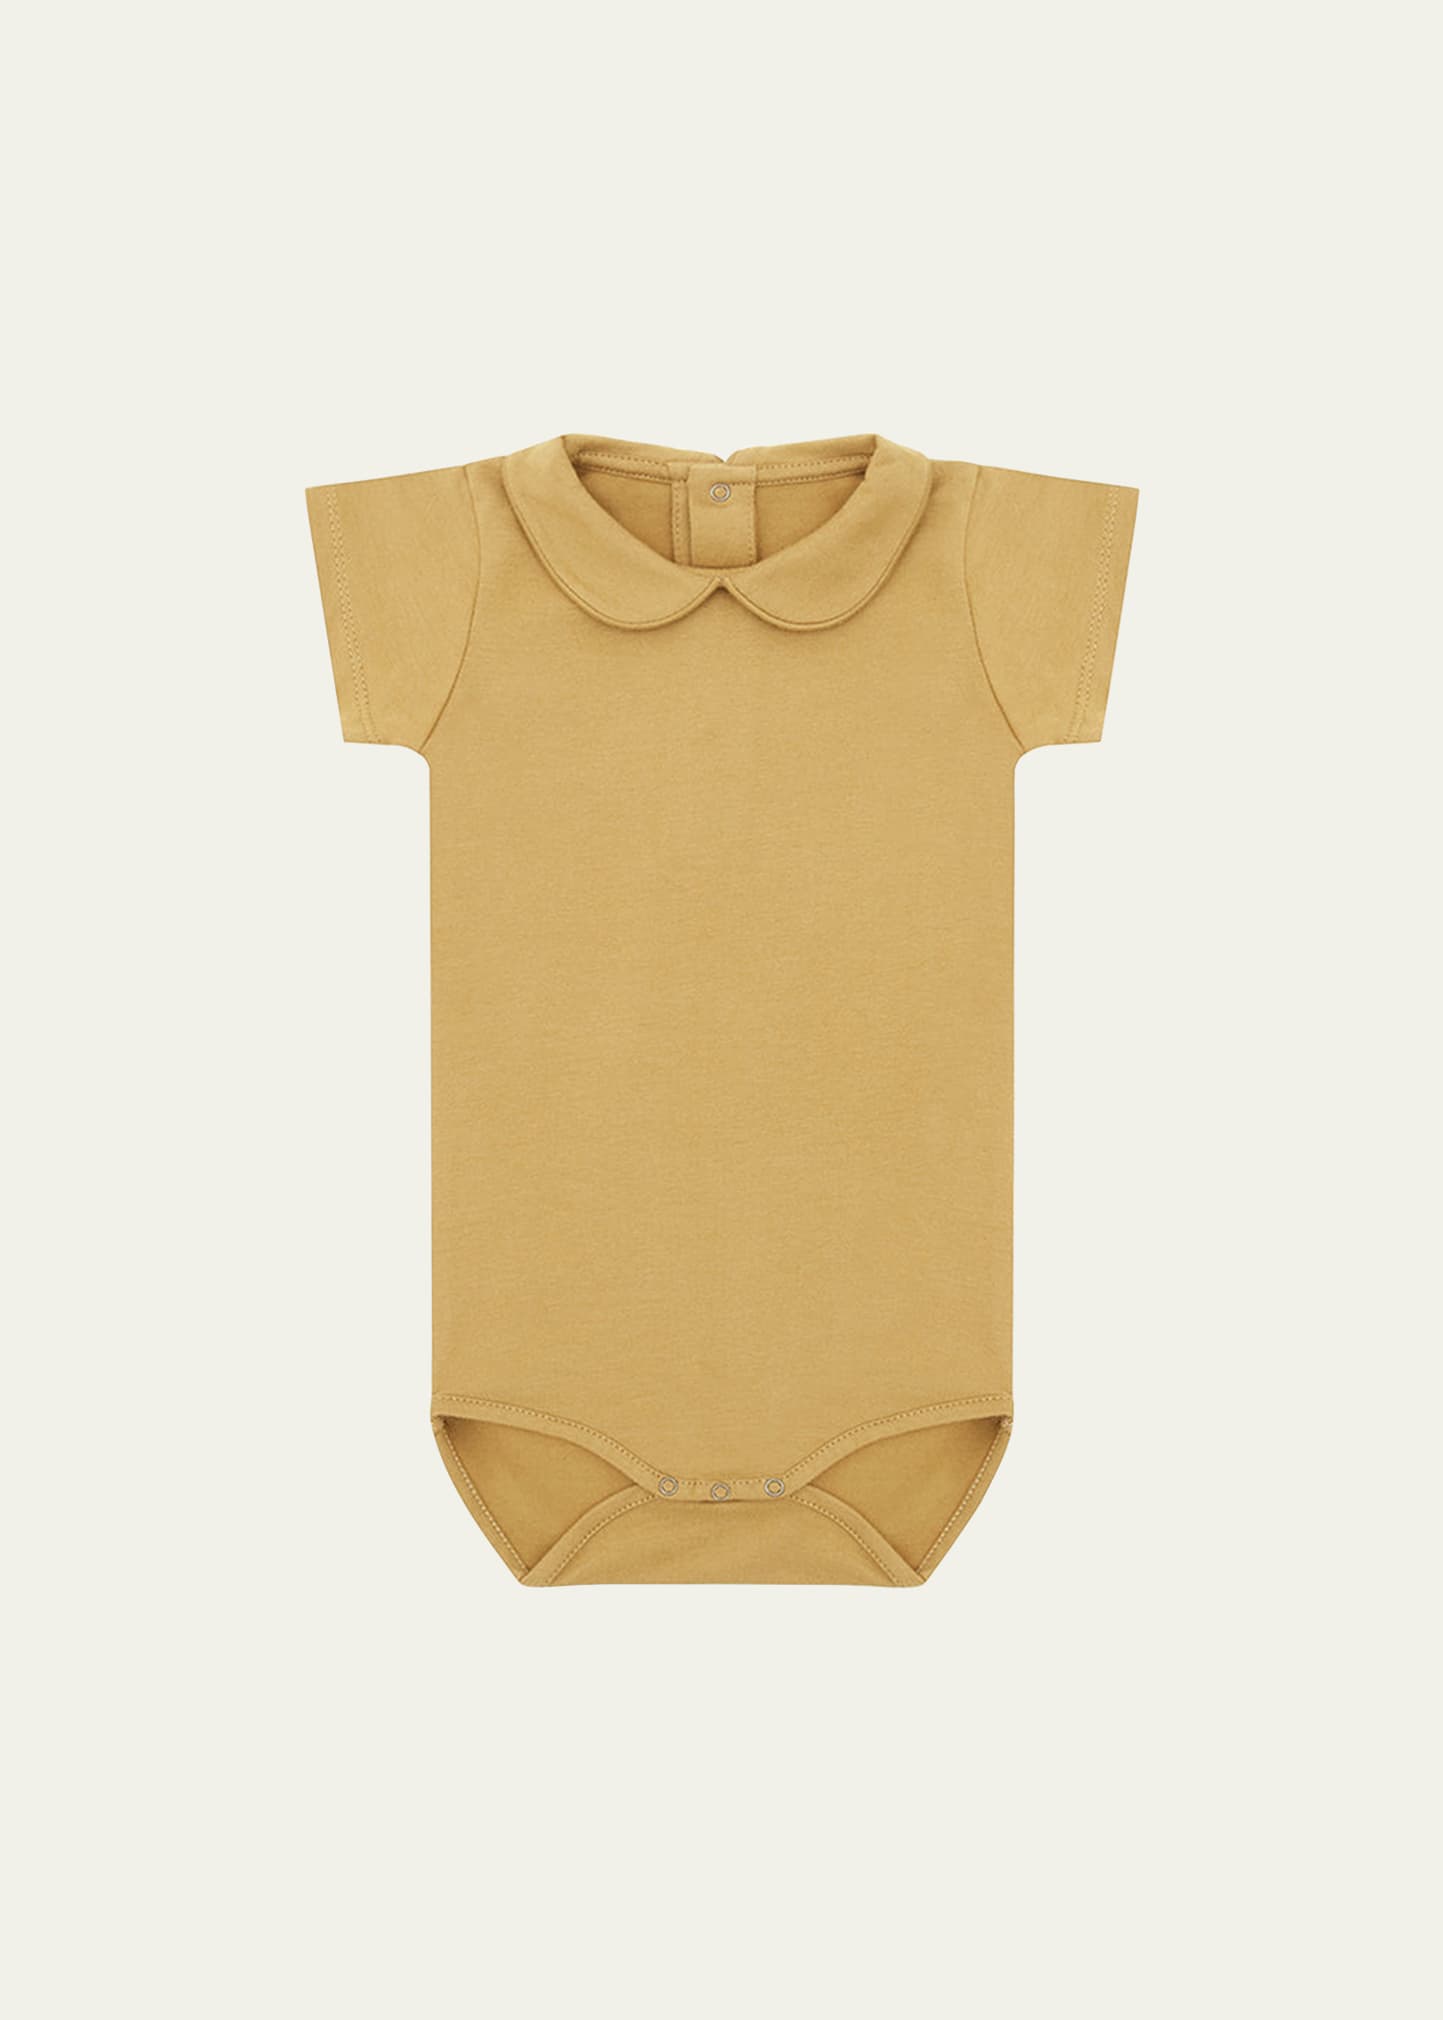 Kid's Short Sleeve Jersey Bodysuit, Size Newborn-18M